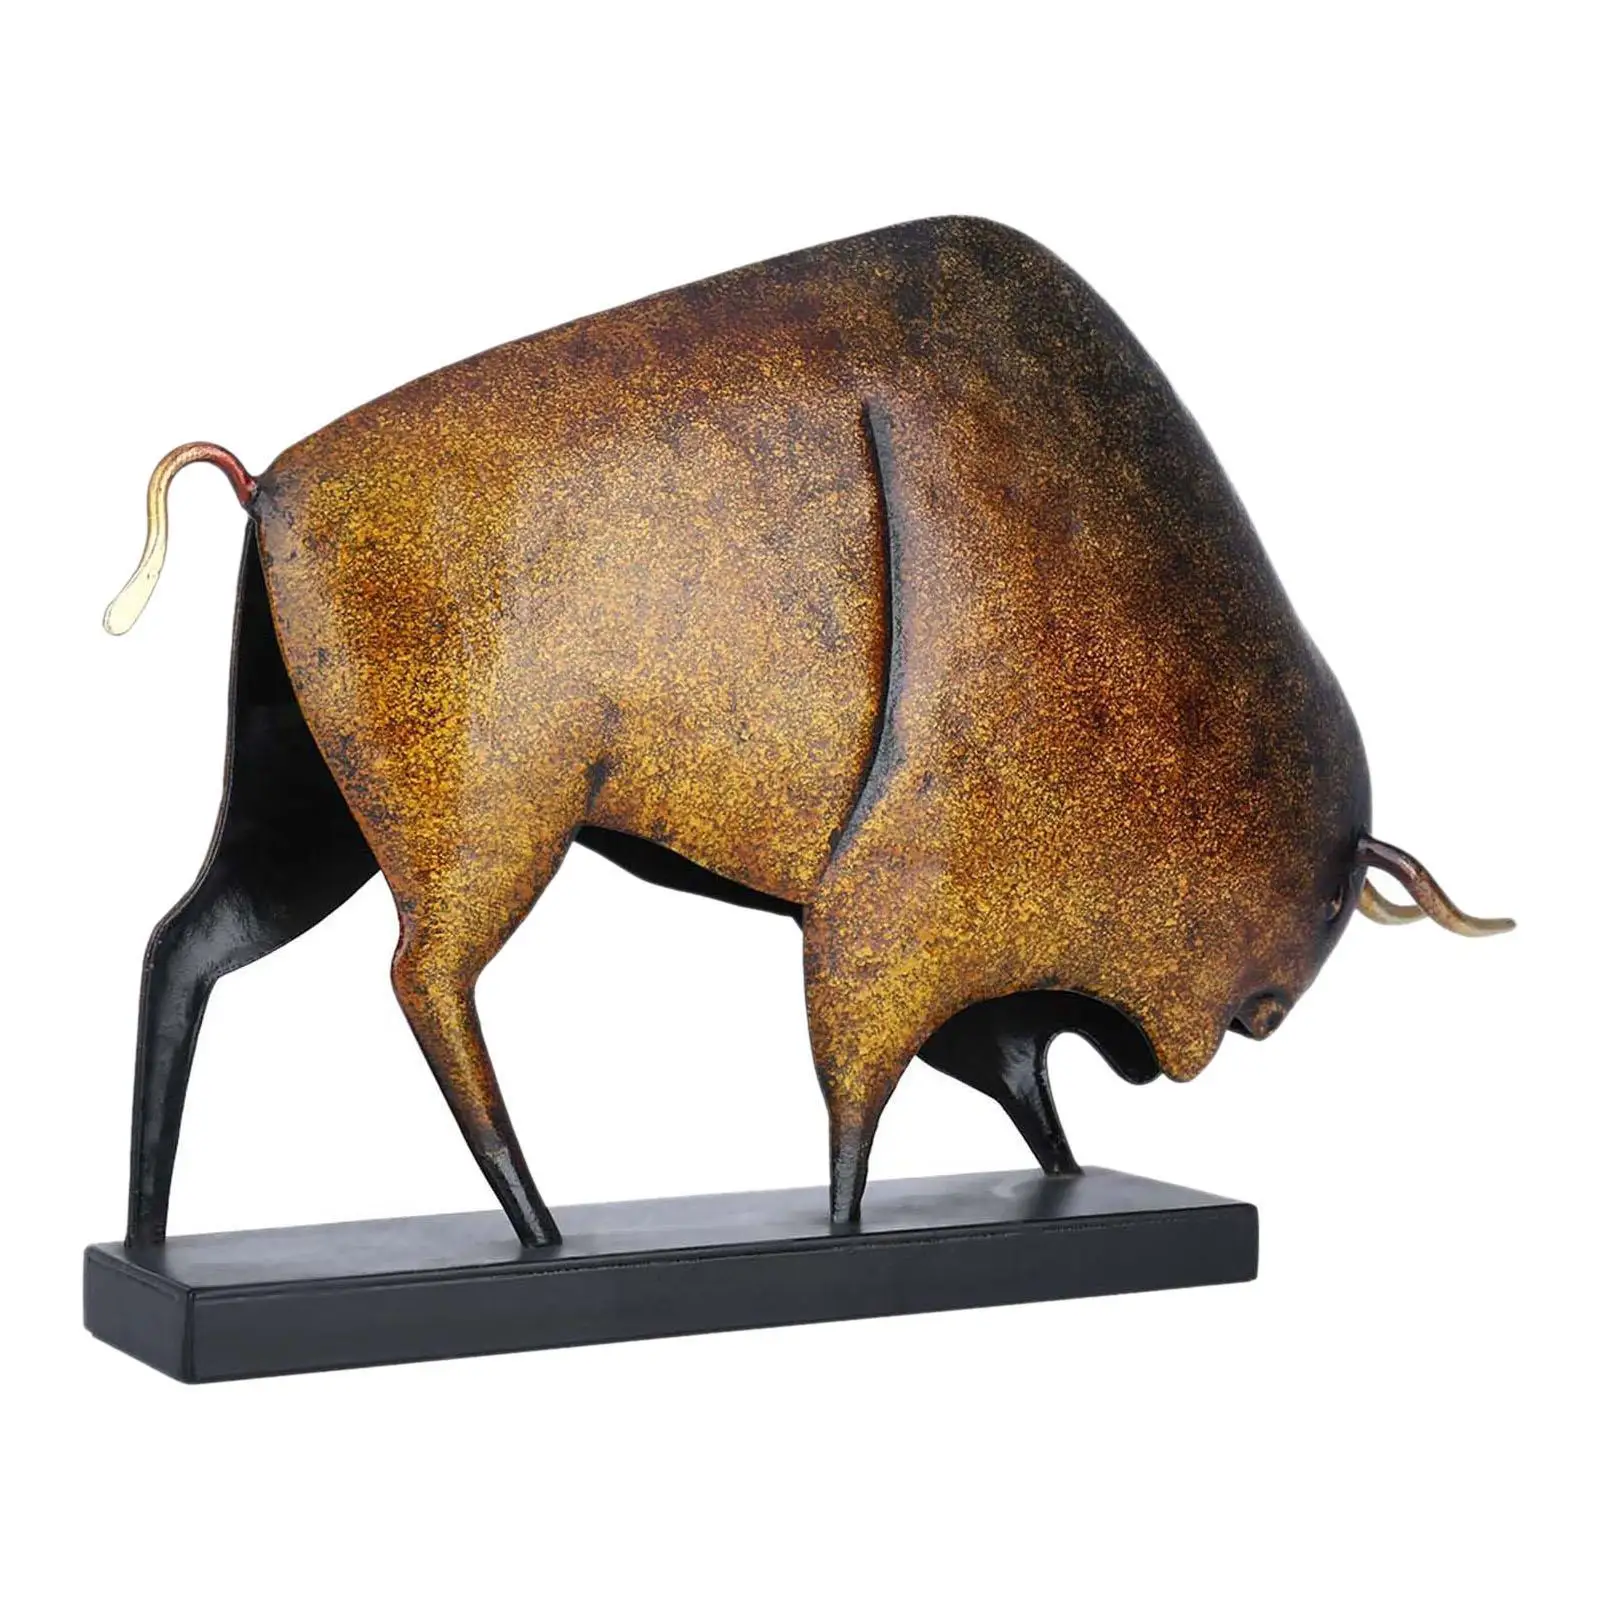 

Metal Bison Sculpture with Base Bull Animal Artist Ox Figurine Art Ornament for Home Decor Desktop Decoration Shelf Tabletop